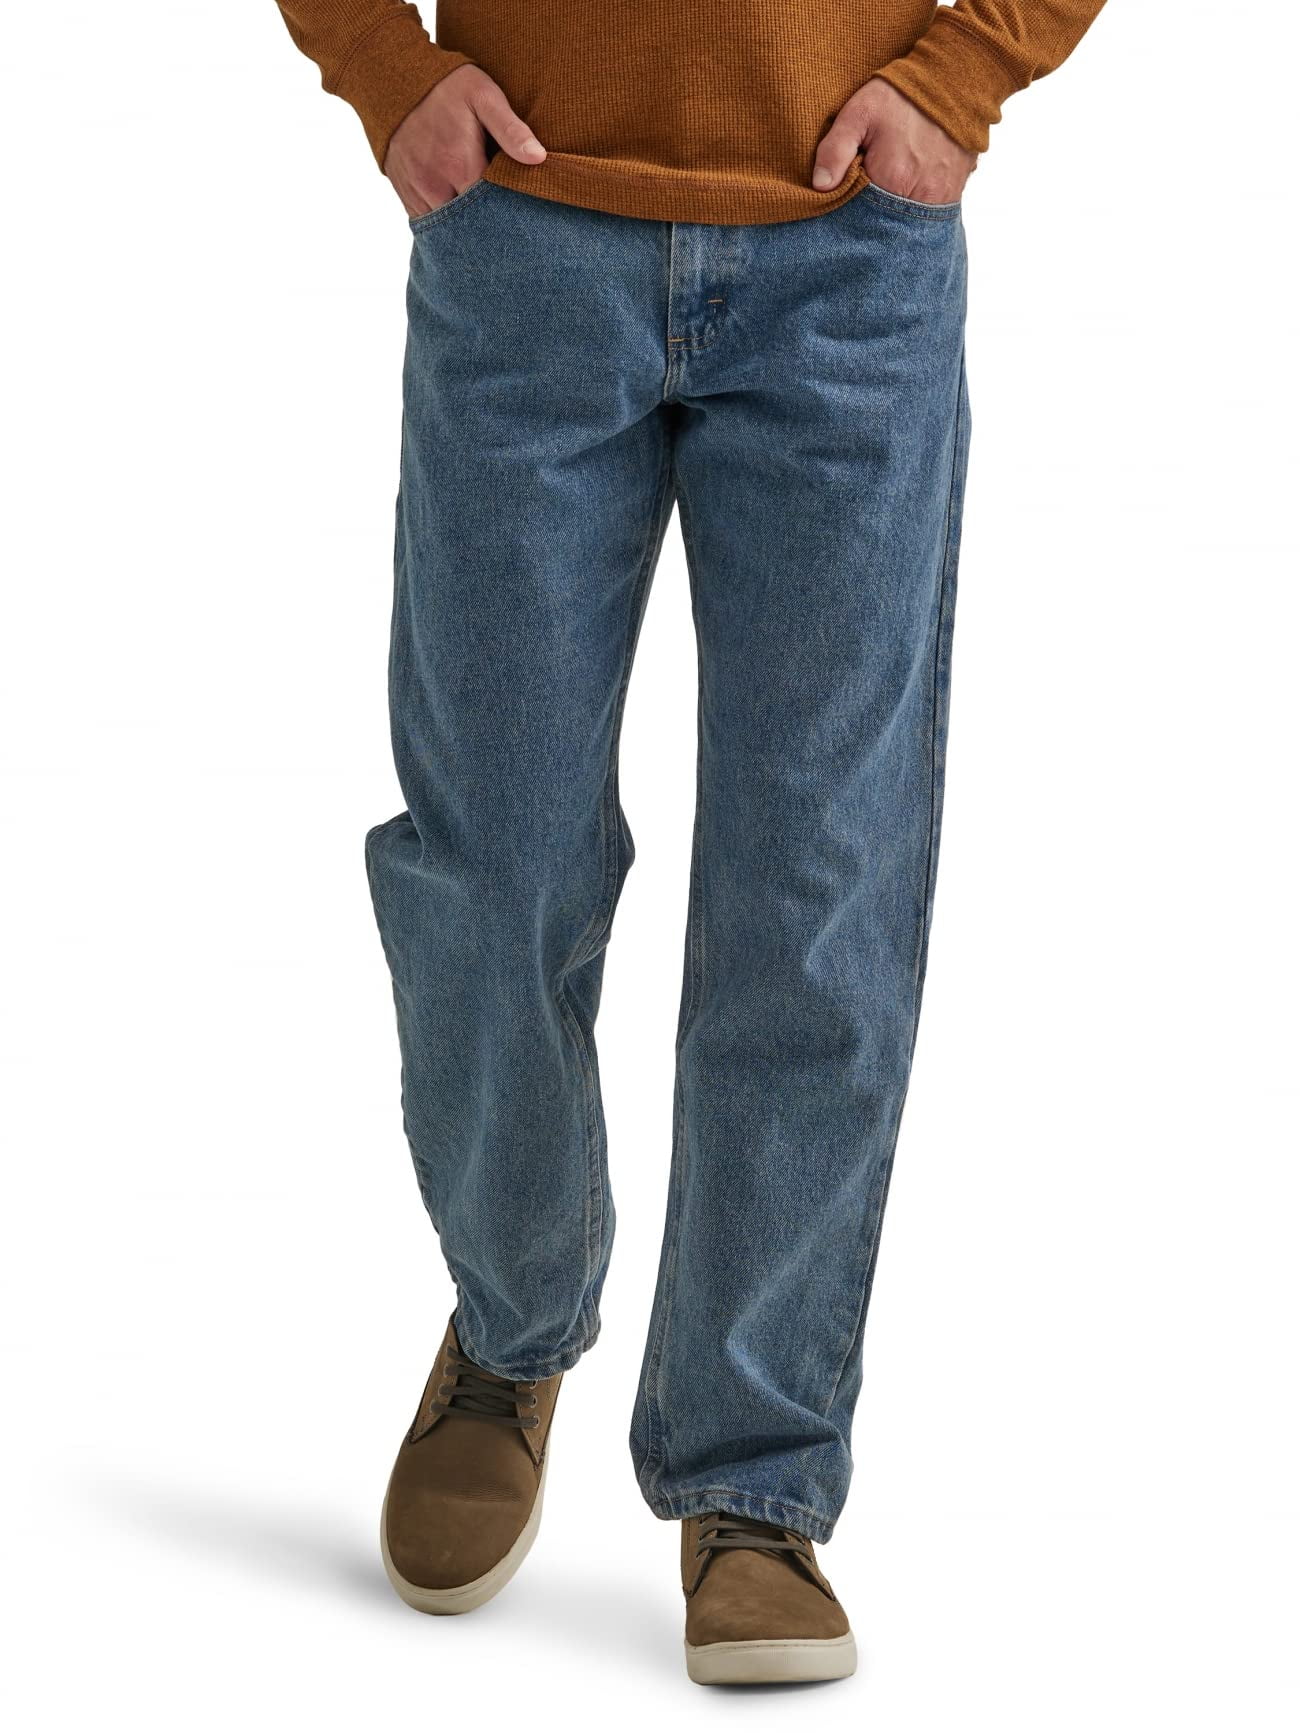 Wrangler Authentics Men's Classic 5-Pocket Relaxed Fit Cotton Jean ...